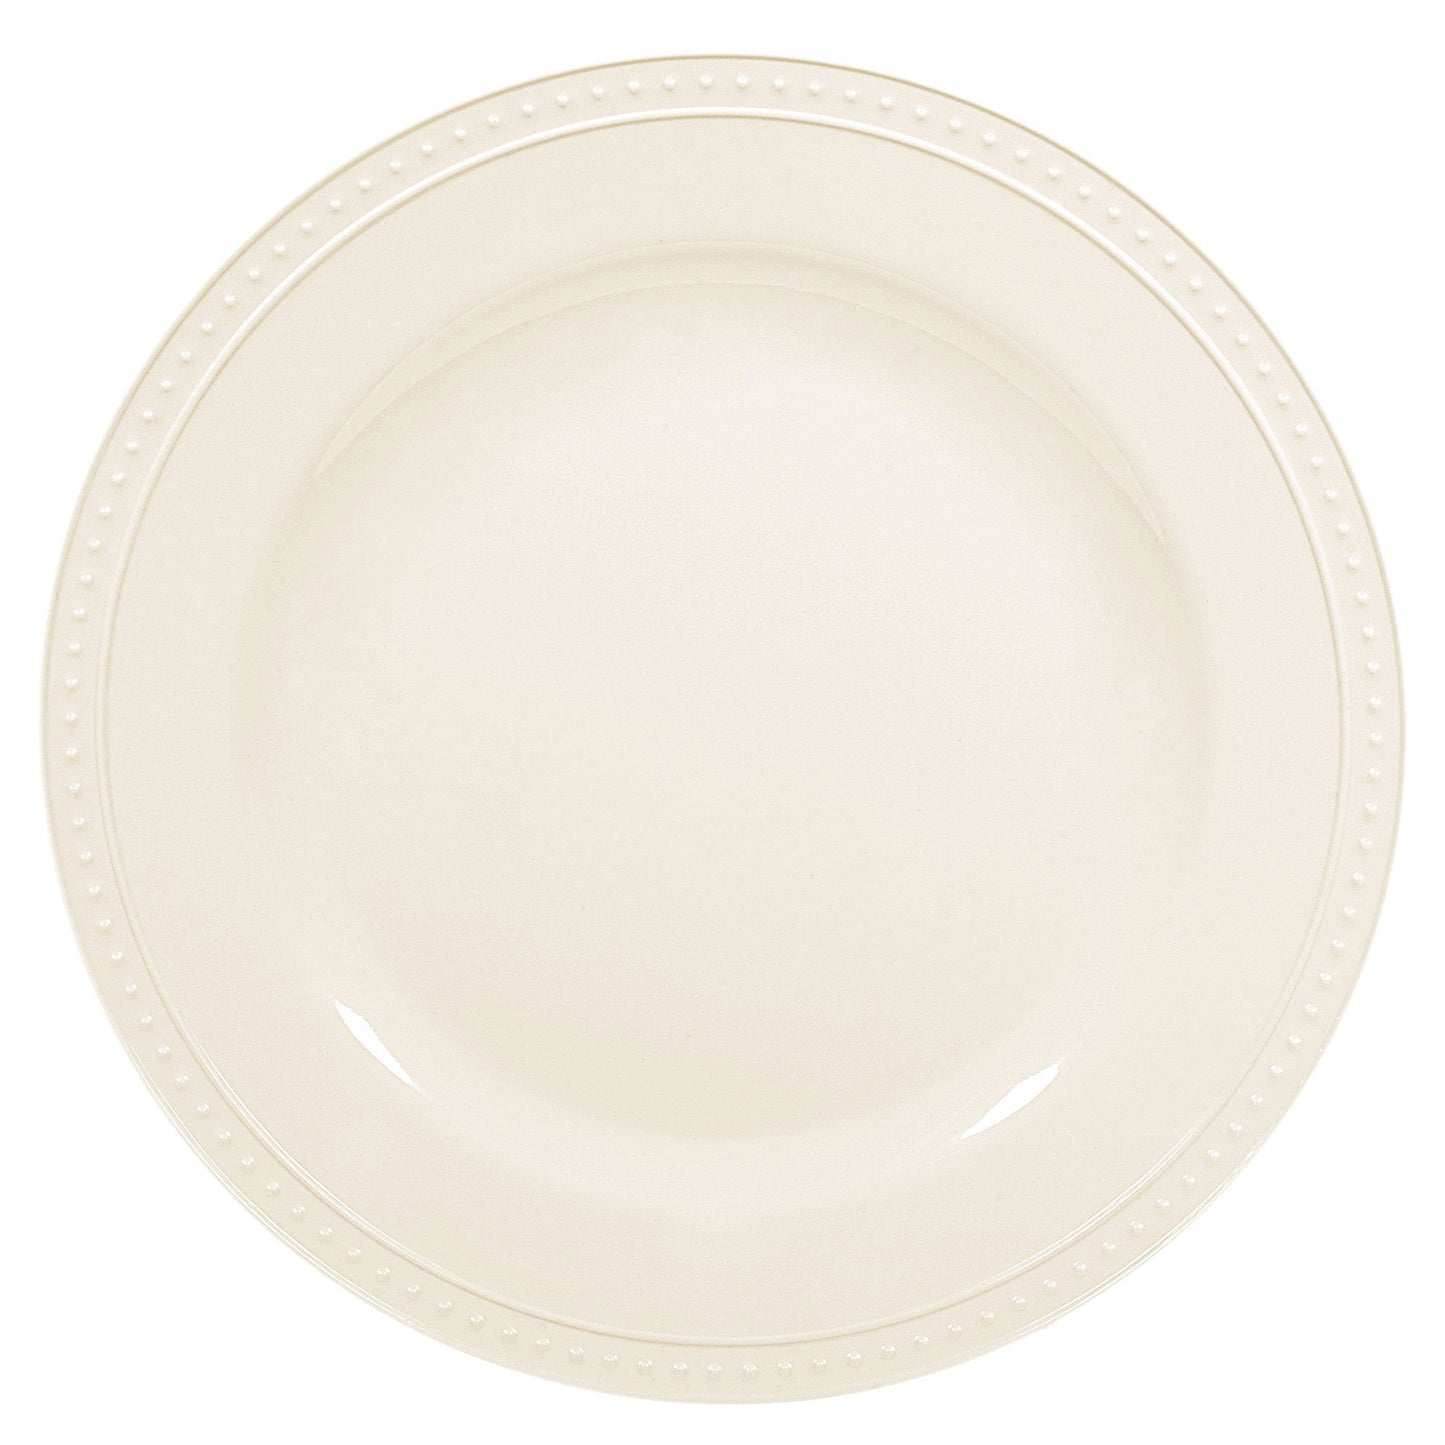 Premium Salad Plate White with Beaded Rim